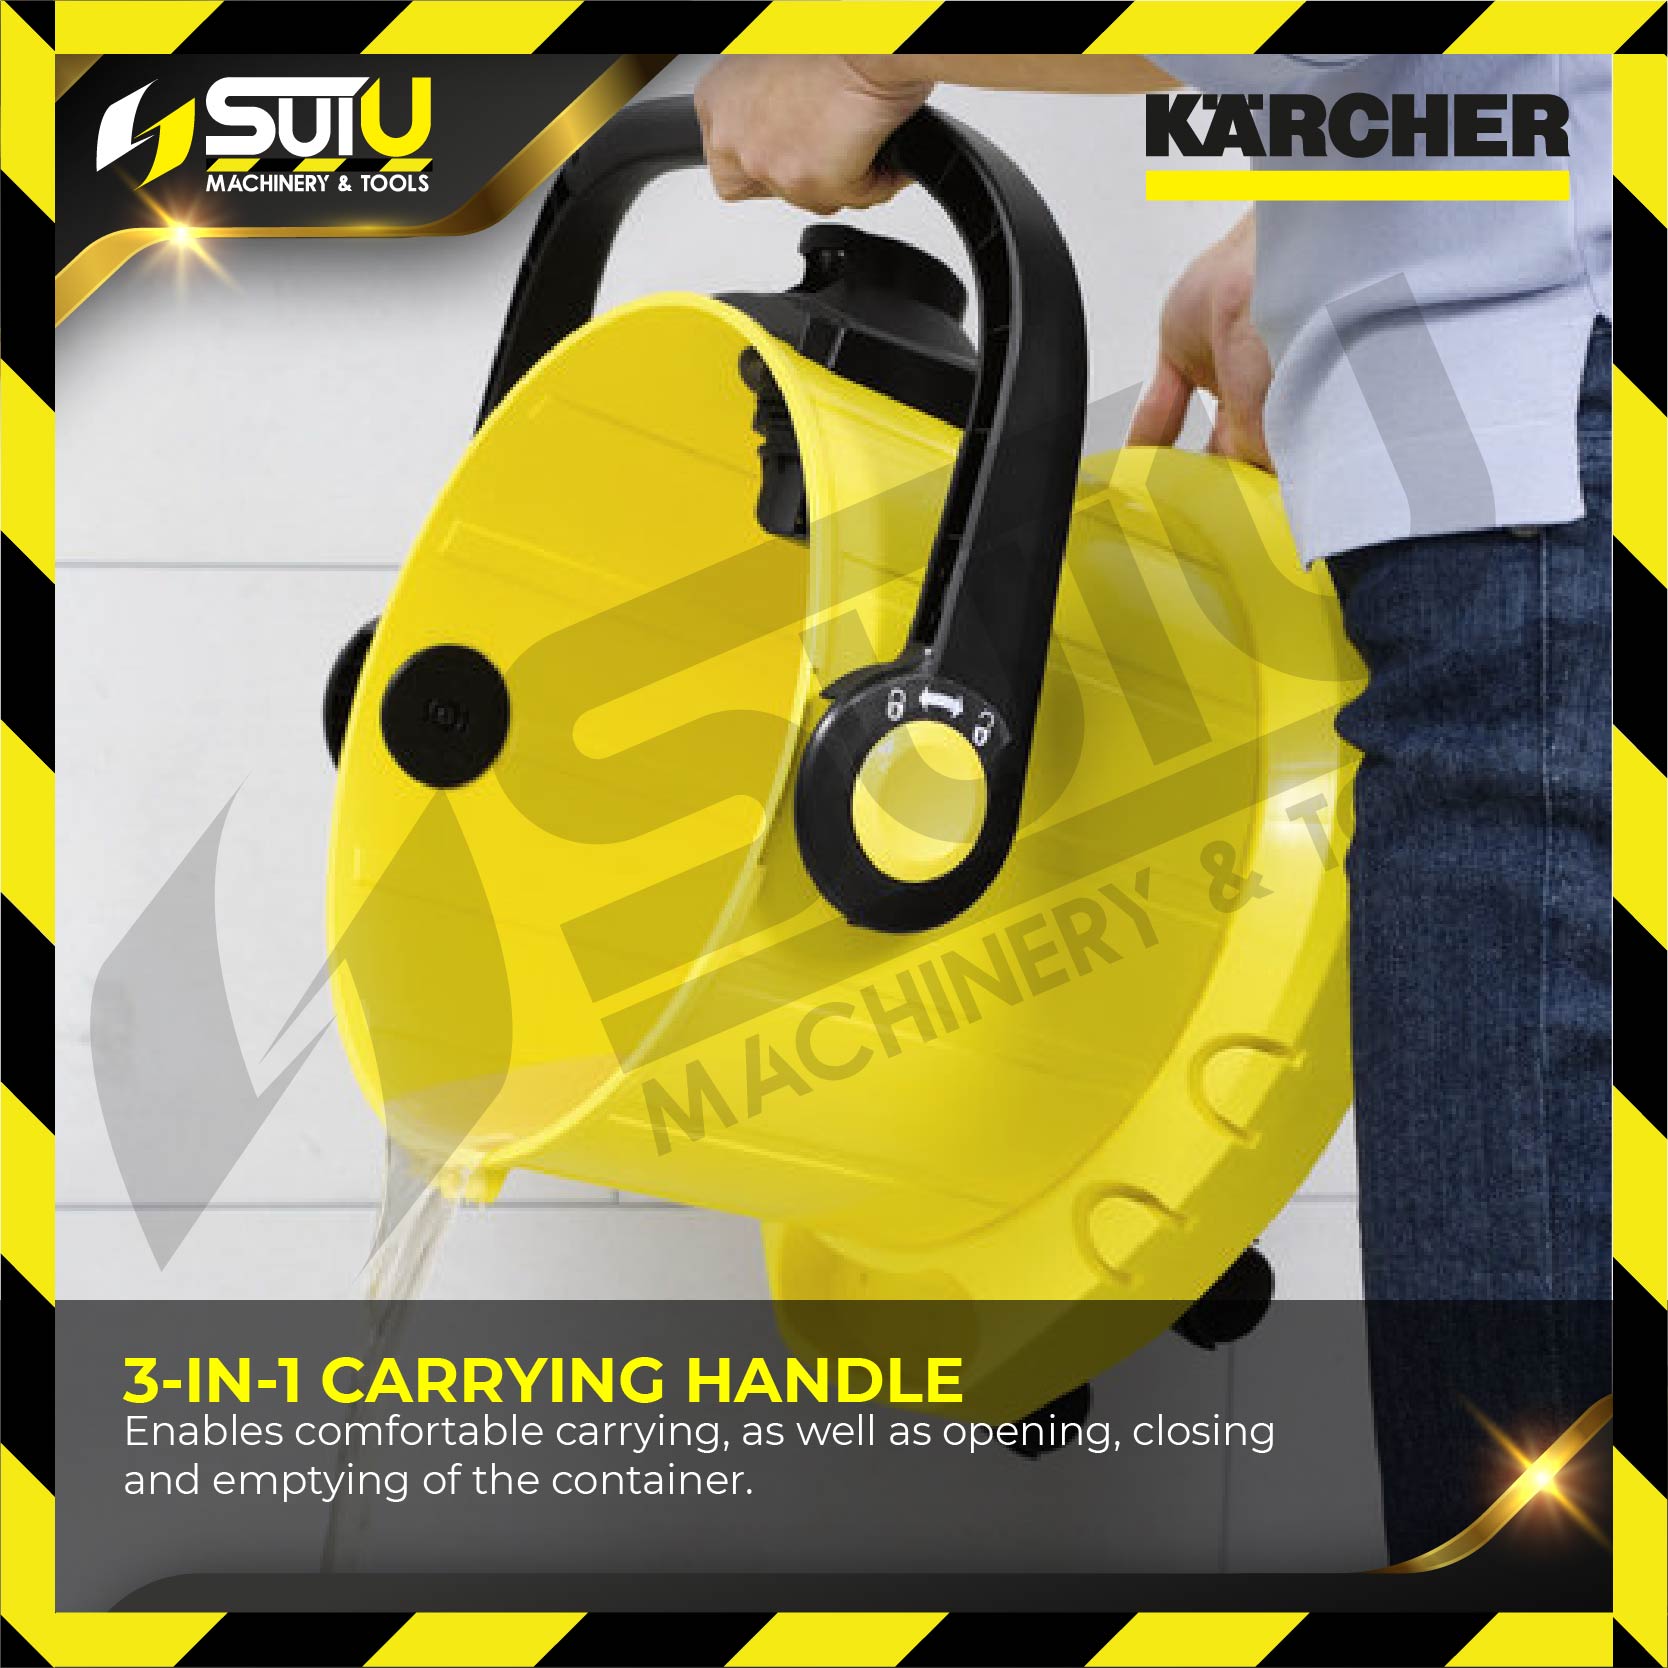 Karcher SE 4001 Carpet & Upholstery Cleaner